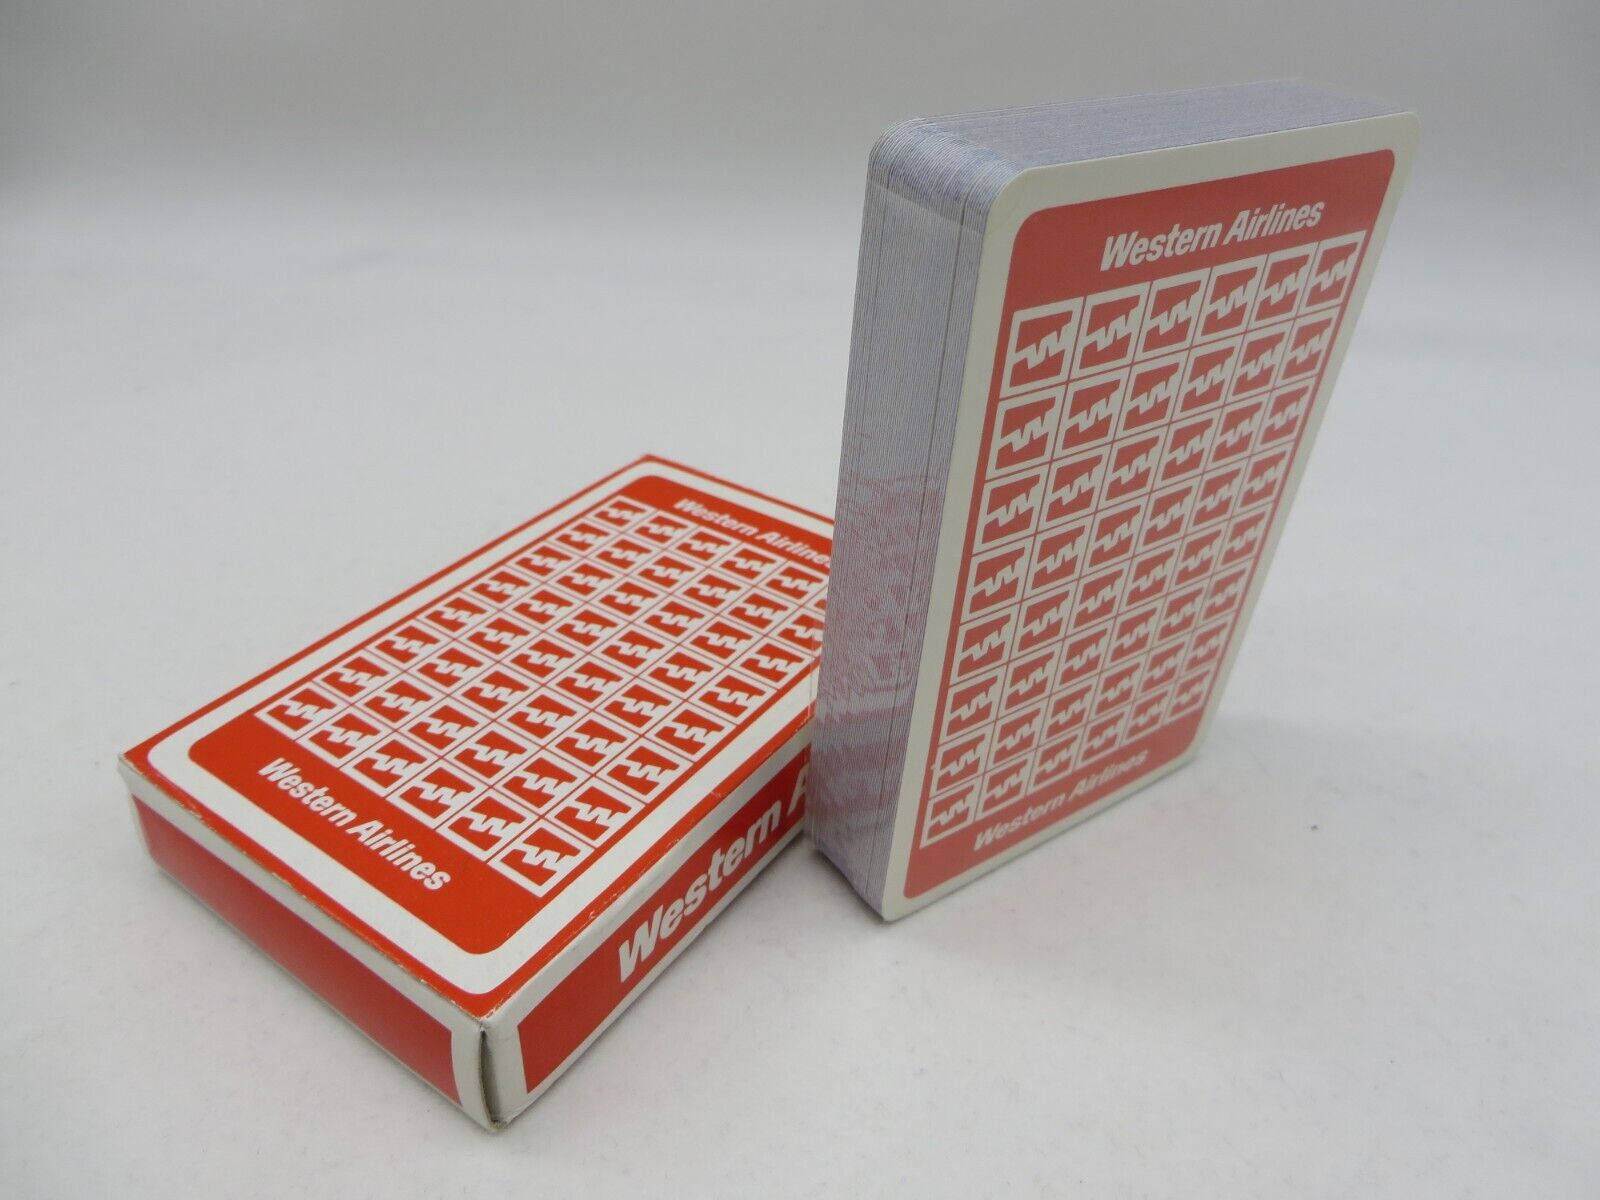 Vintage Western Airlines Playing Cards, Sealed Deck, Orange, Travel Souvenir